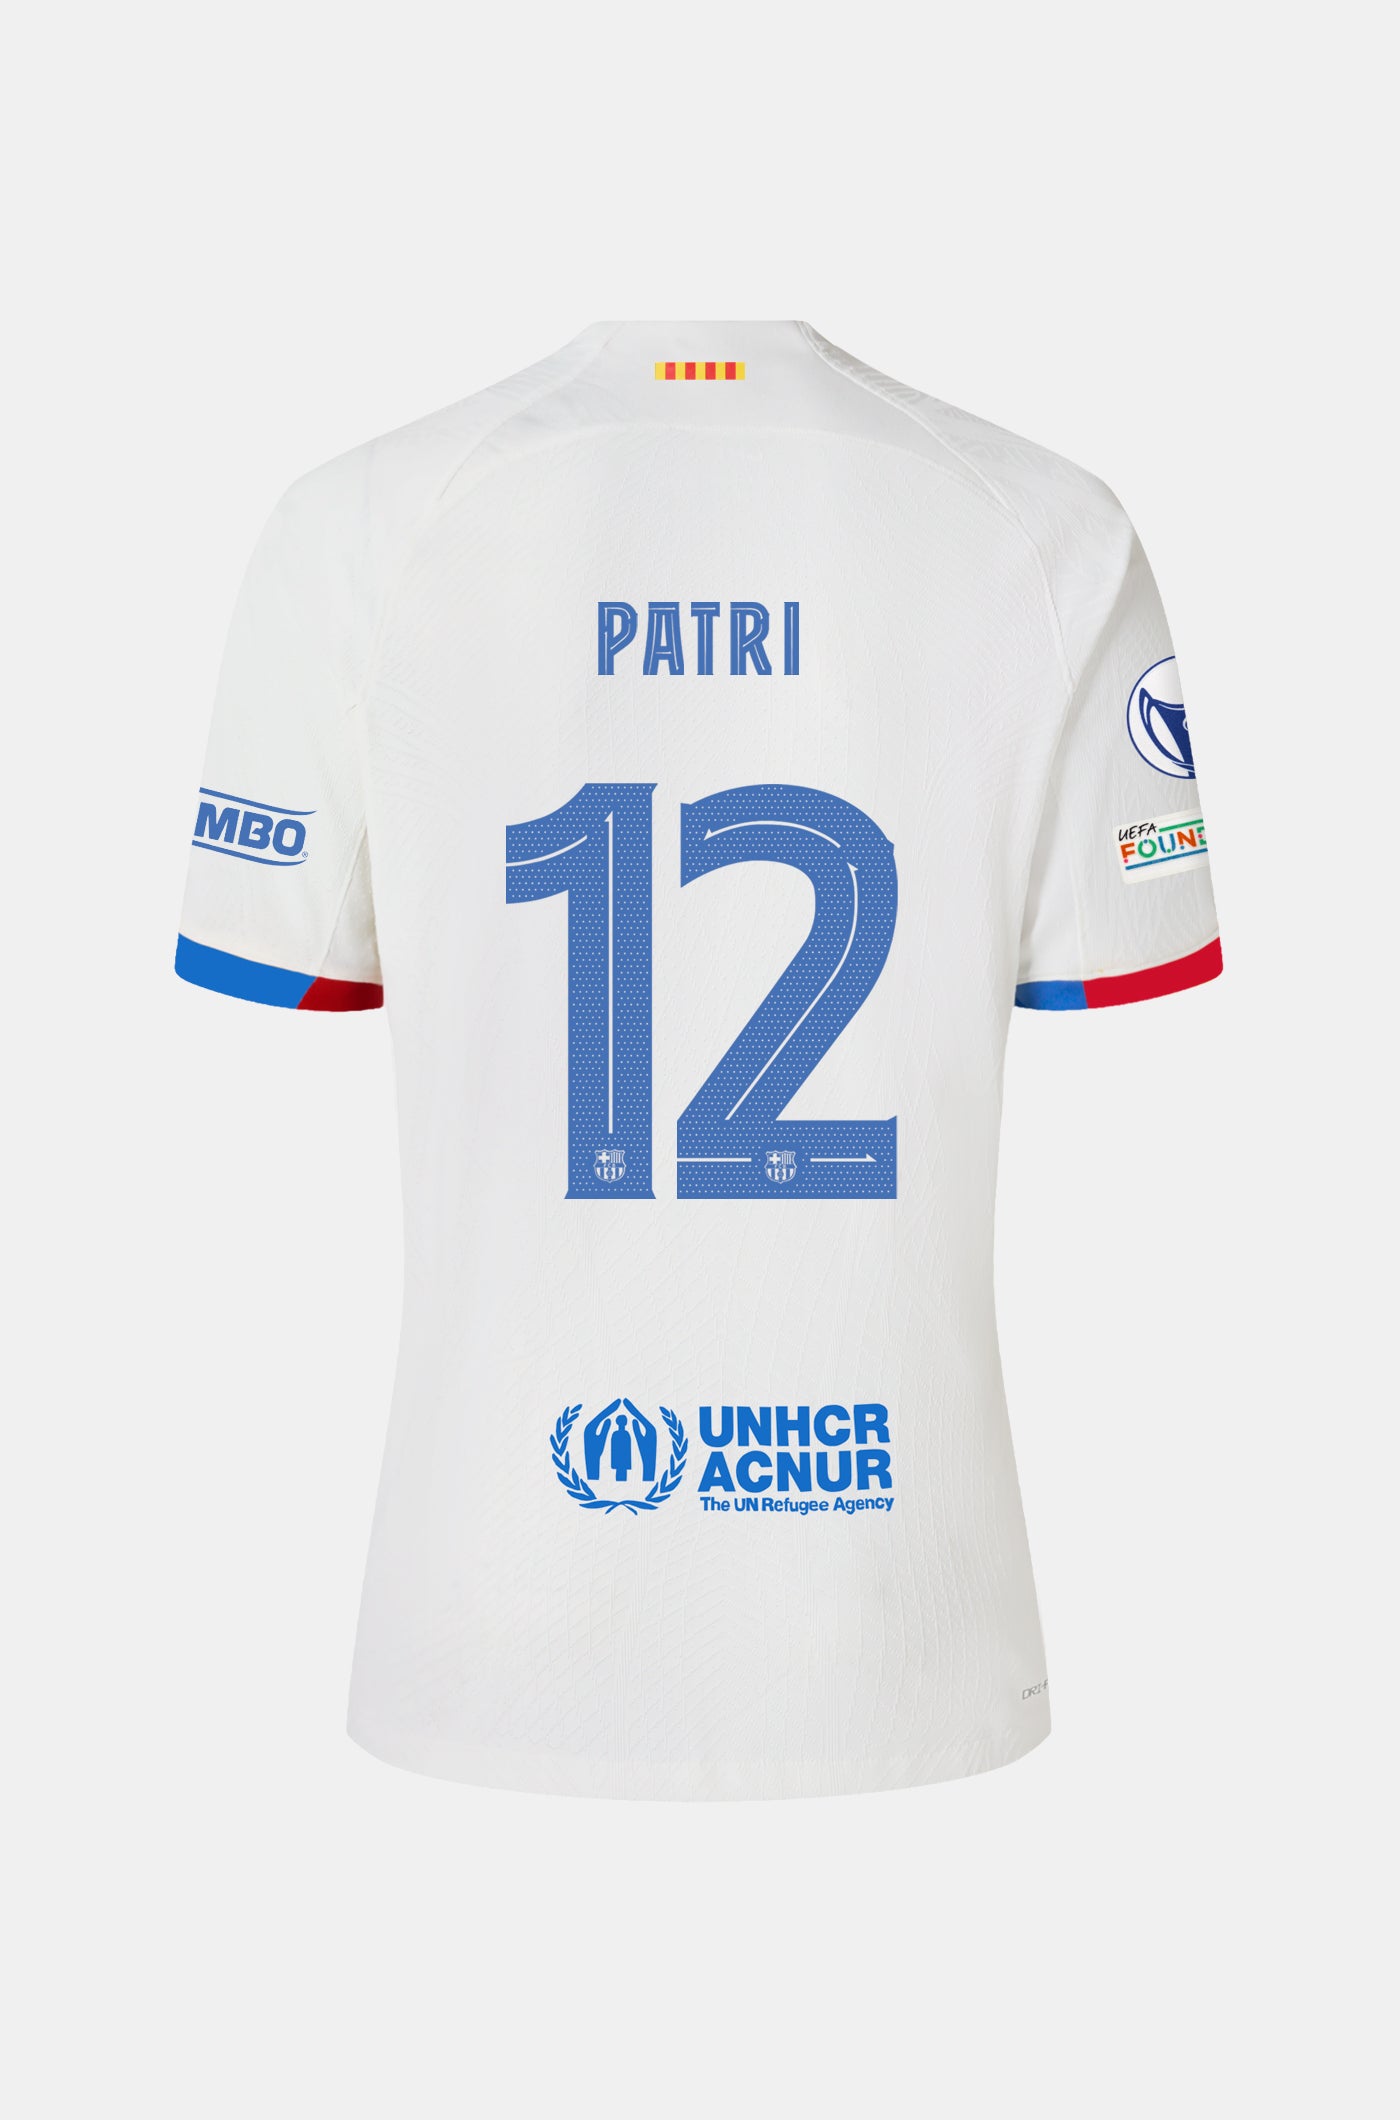 UWCL FC Barcelona Away Shirt 23/24 Player’s Edition - Women  - PATRI